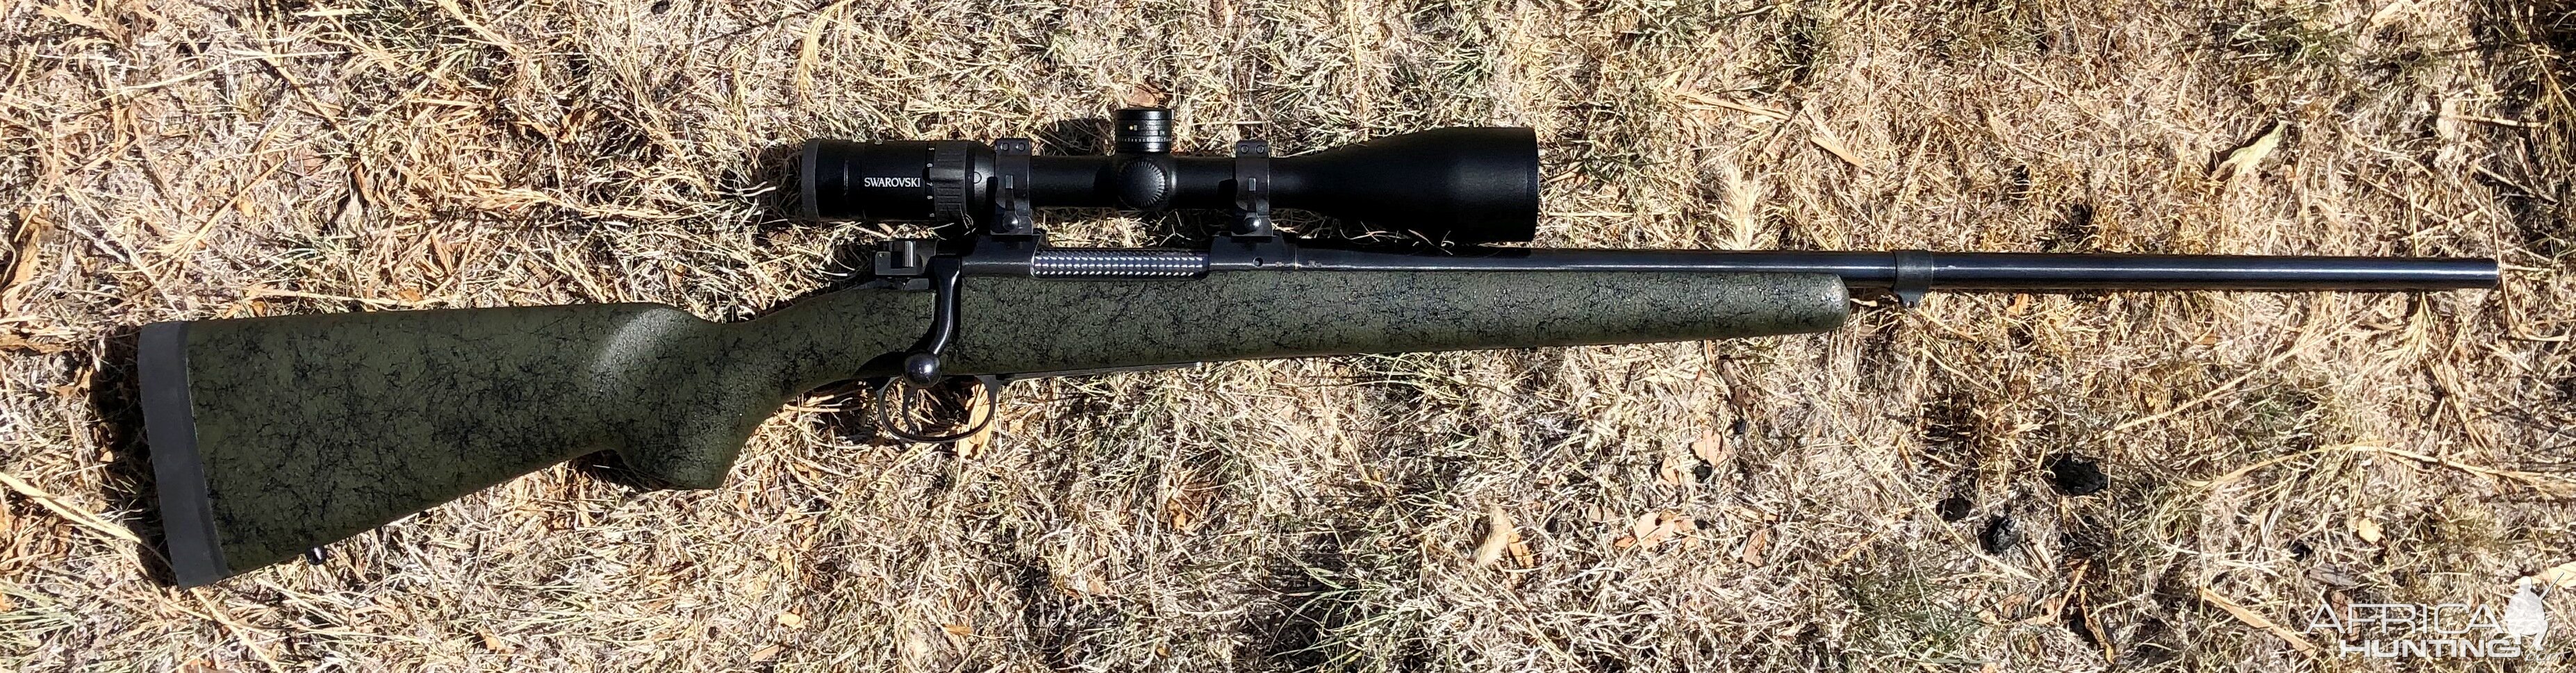 CZ 550 standard length action .270 Win rifle